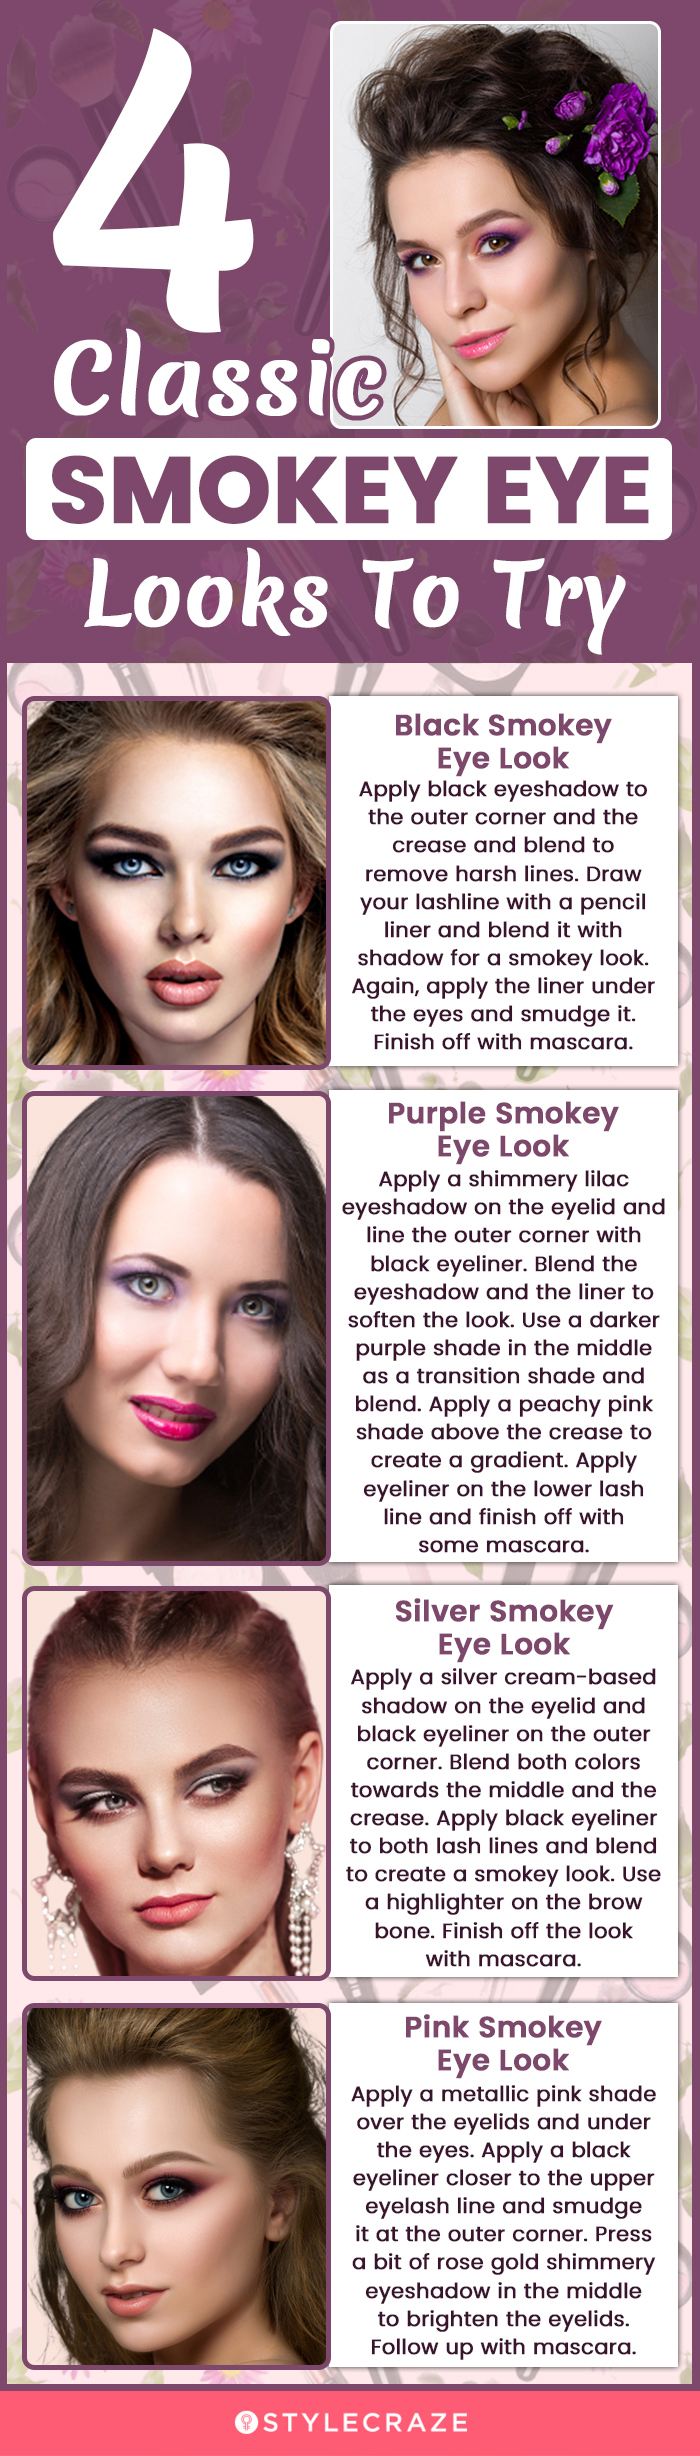 4 classic smokey eye looks to try (infographic)